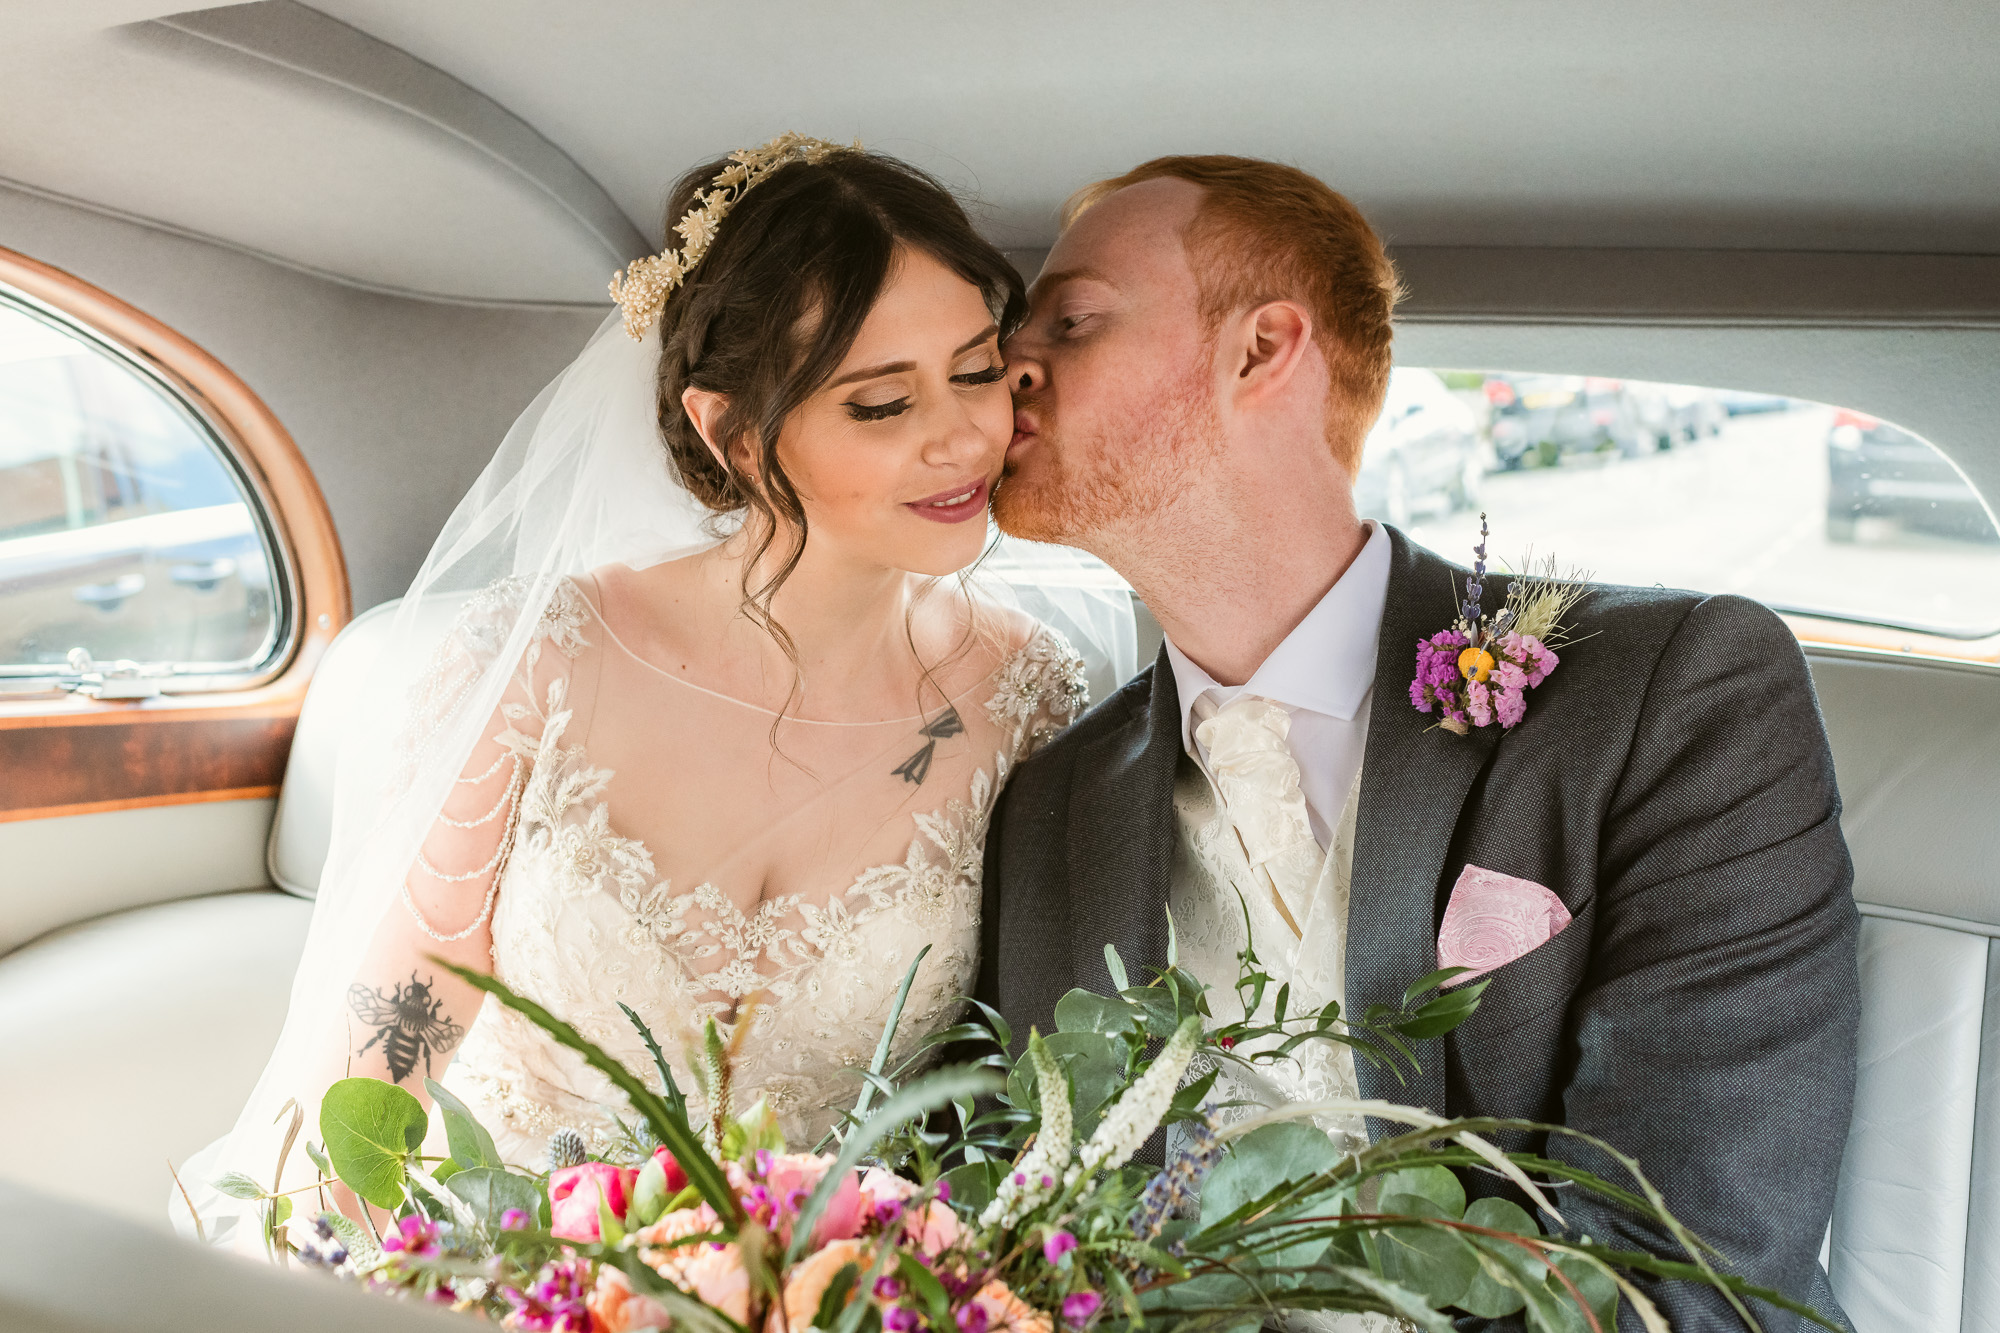 William Cecil wedding photography – Rebekah & Rhys